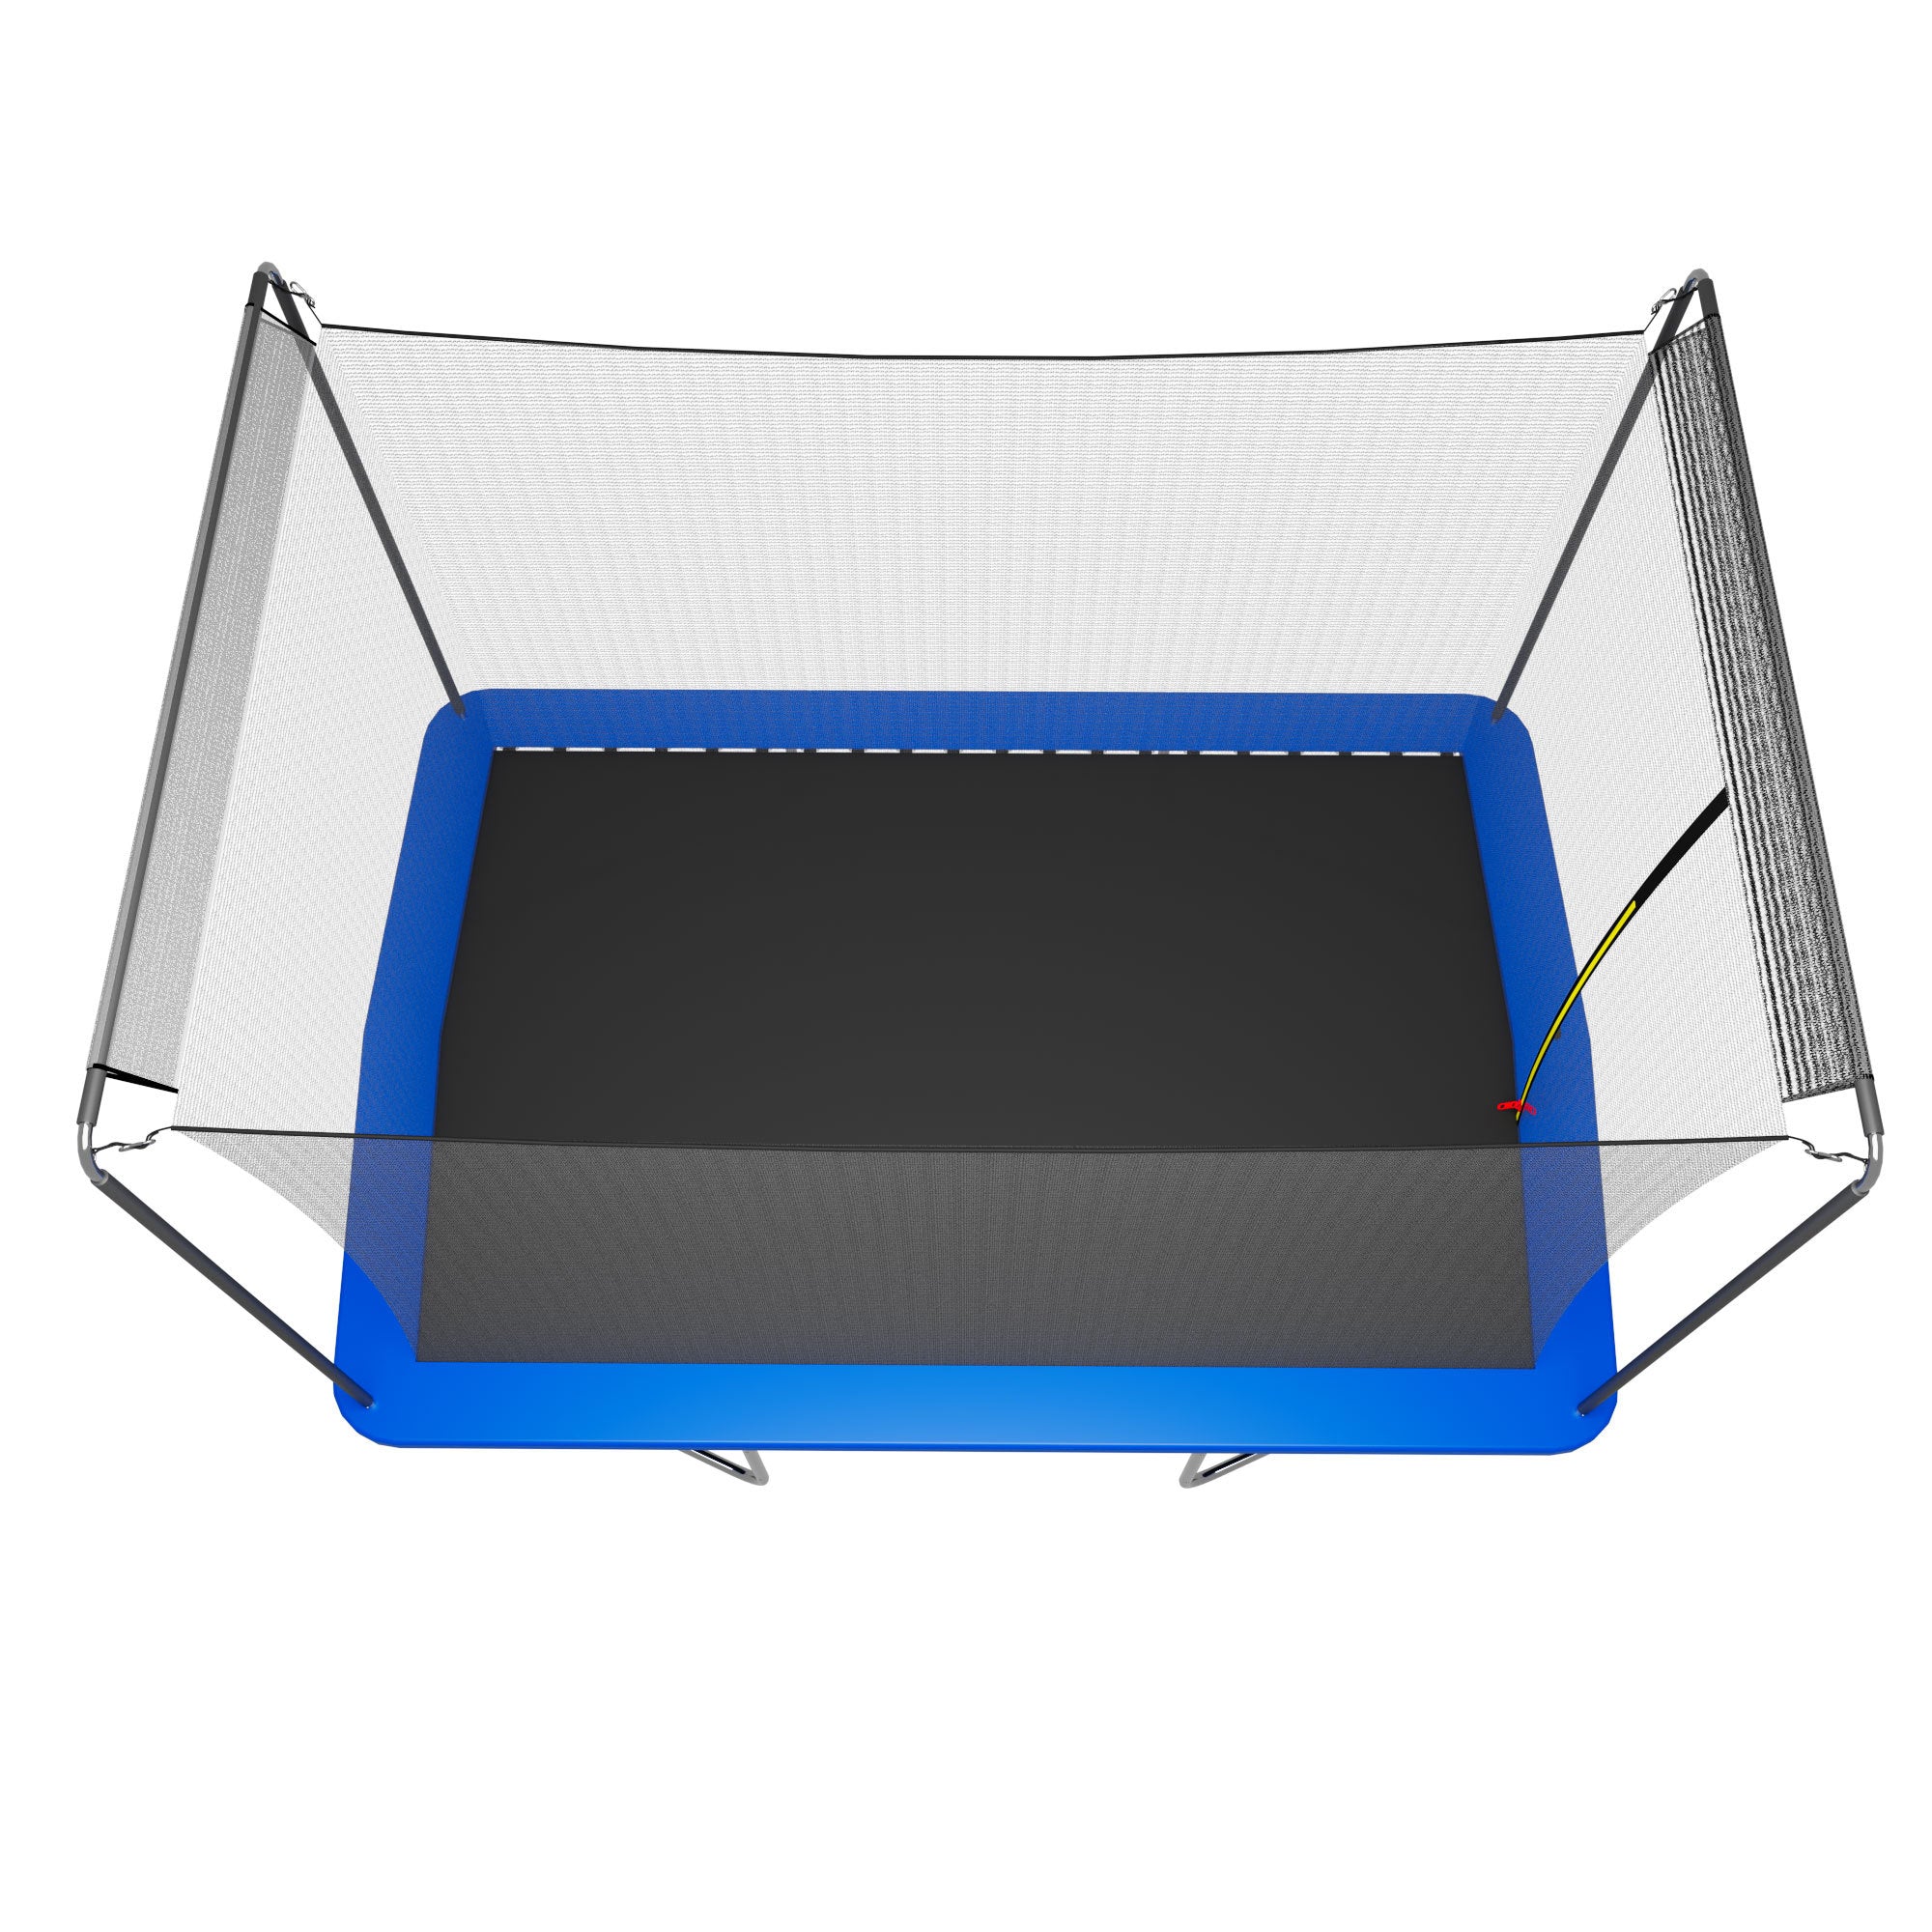 8ft by 12ft rectangular trampoline blue Astm